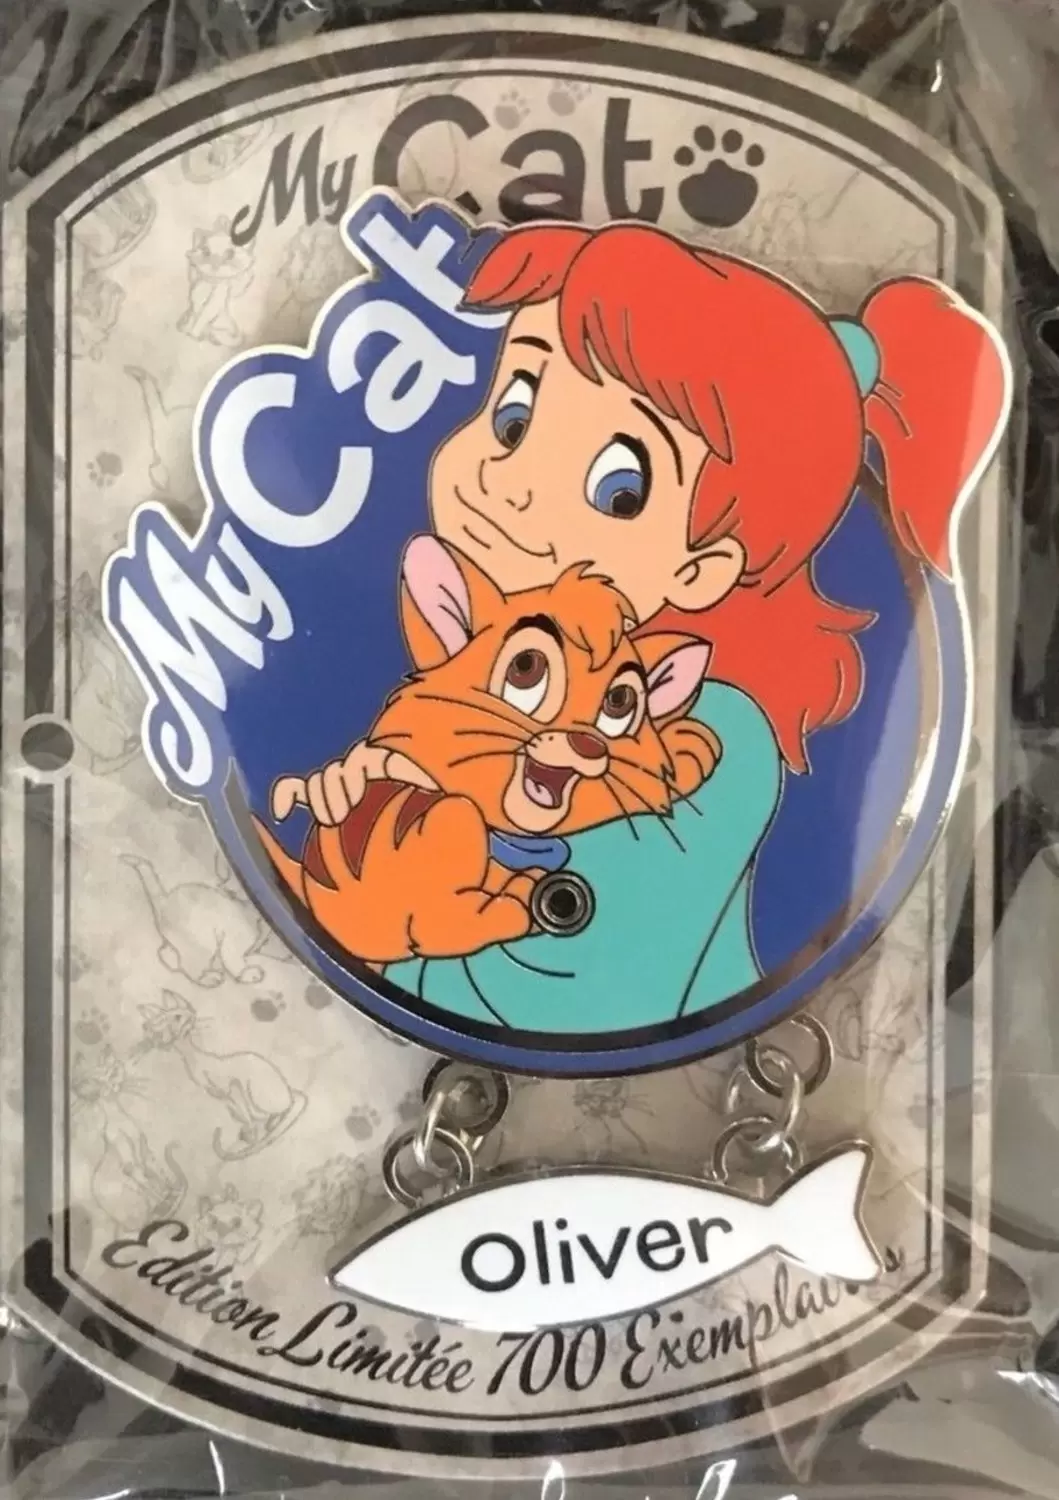 My Cat - My Dog - My Cat Oliver